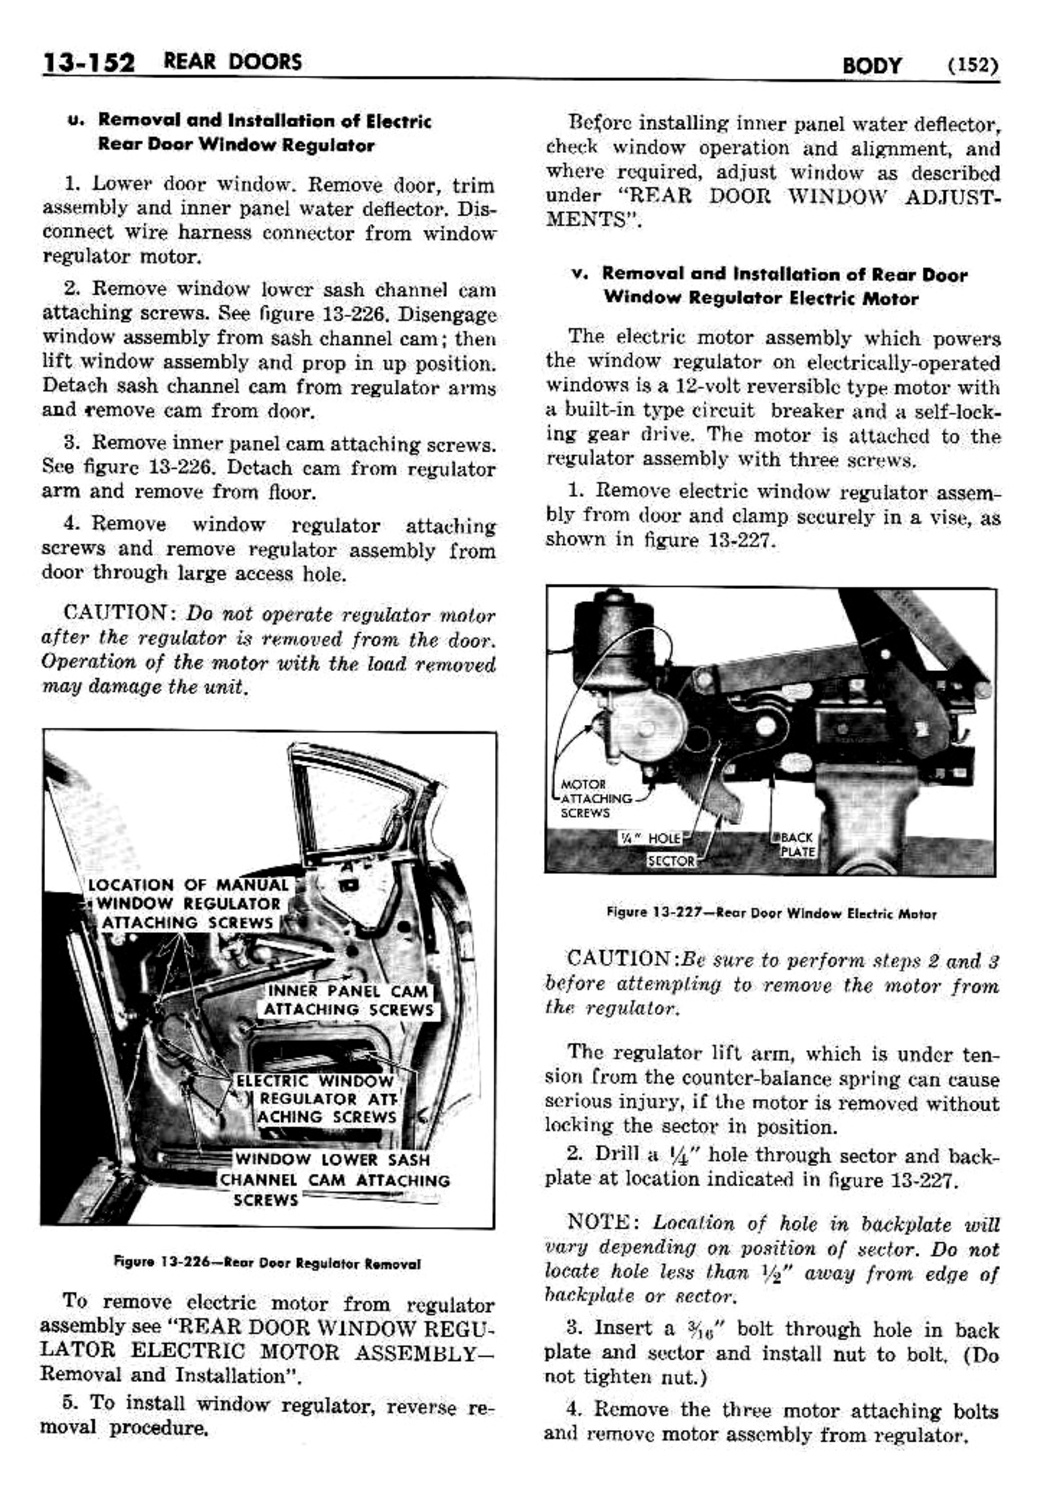 n_1958 Buick Body Service Manual-153-153.jpg